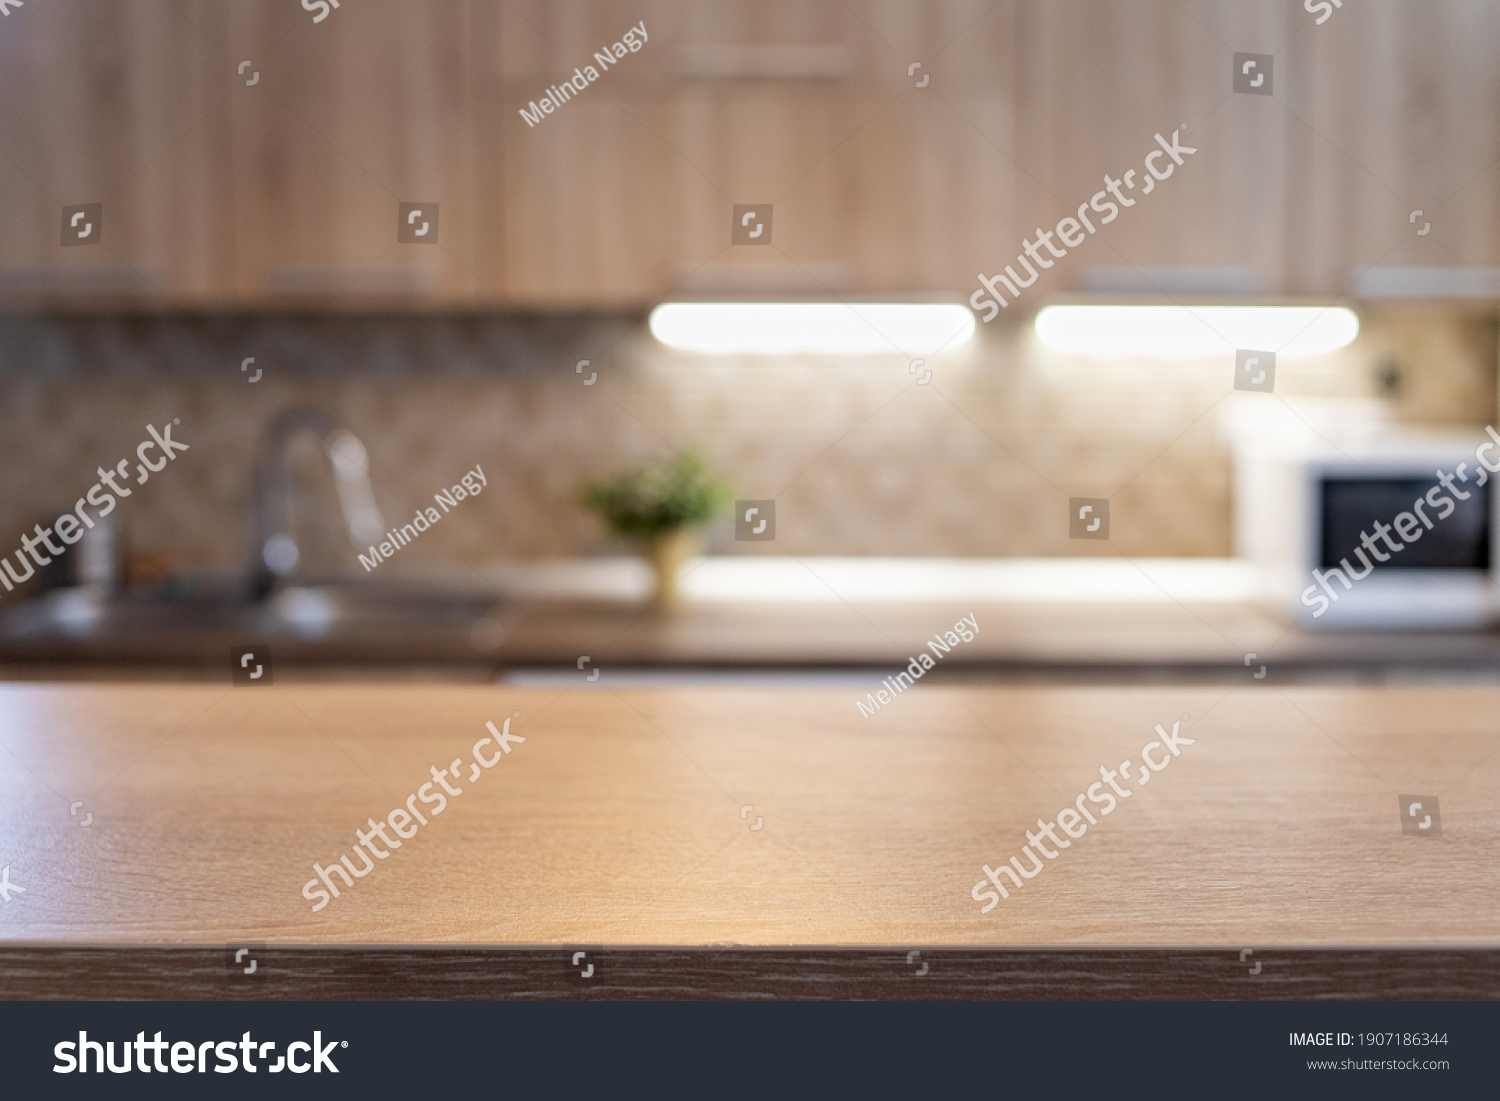 blurred kitchen interior and wooden desk space home background #1907186344